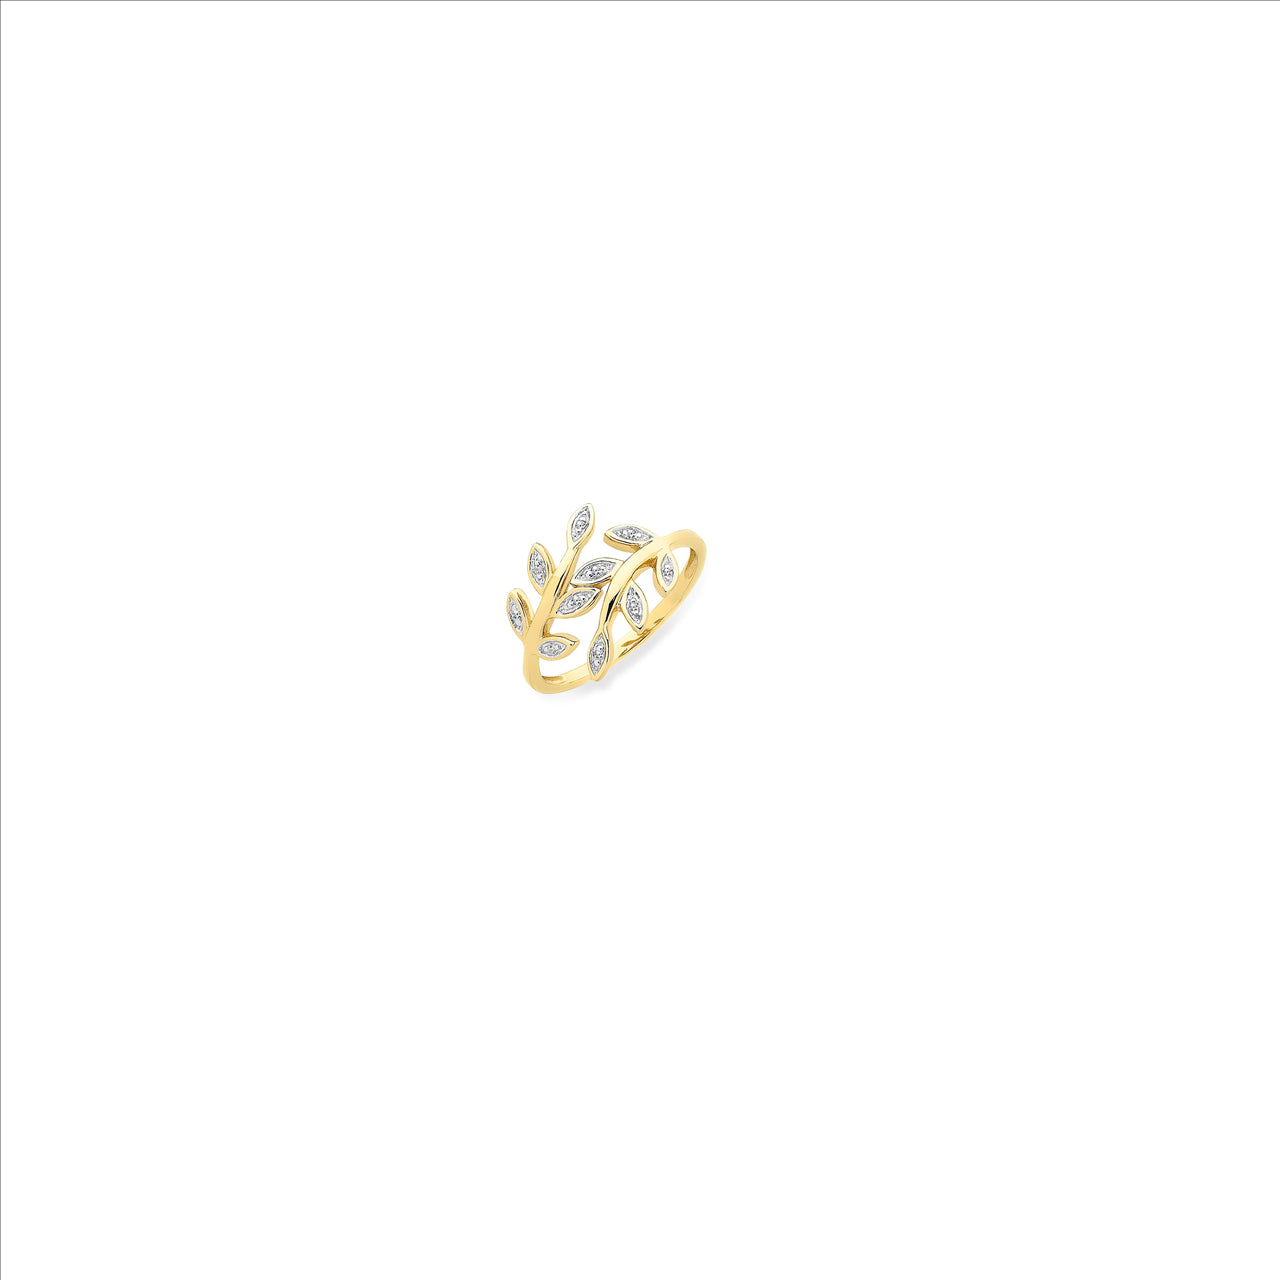 9ct yellow gold leaf design diamond ring